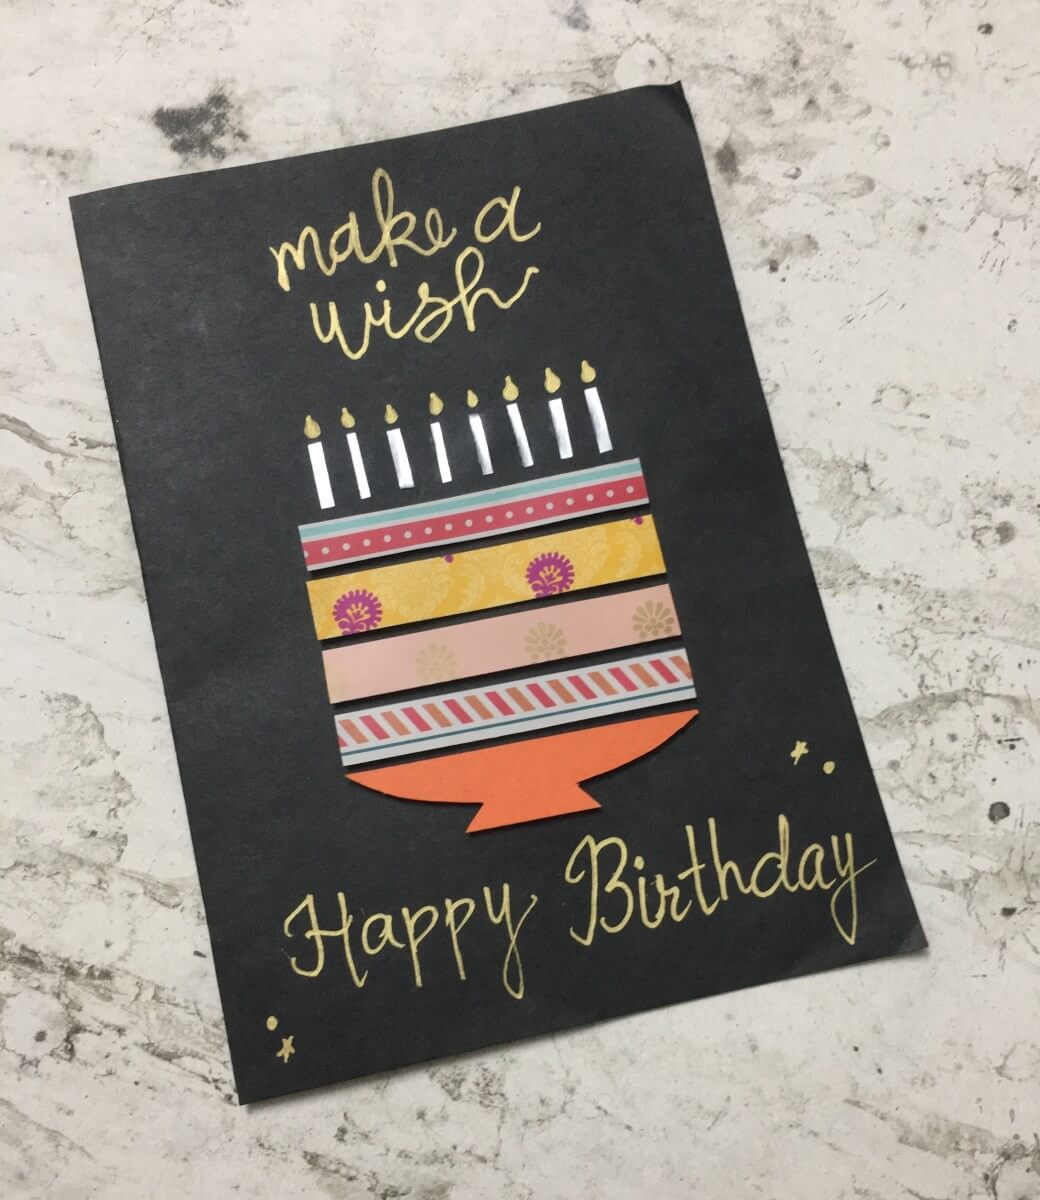 Simple Birthday Card Idea in 10 Minutes Using Cardstock PaperDIY cardstock cards